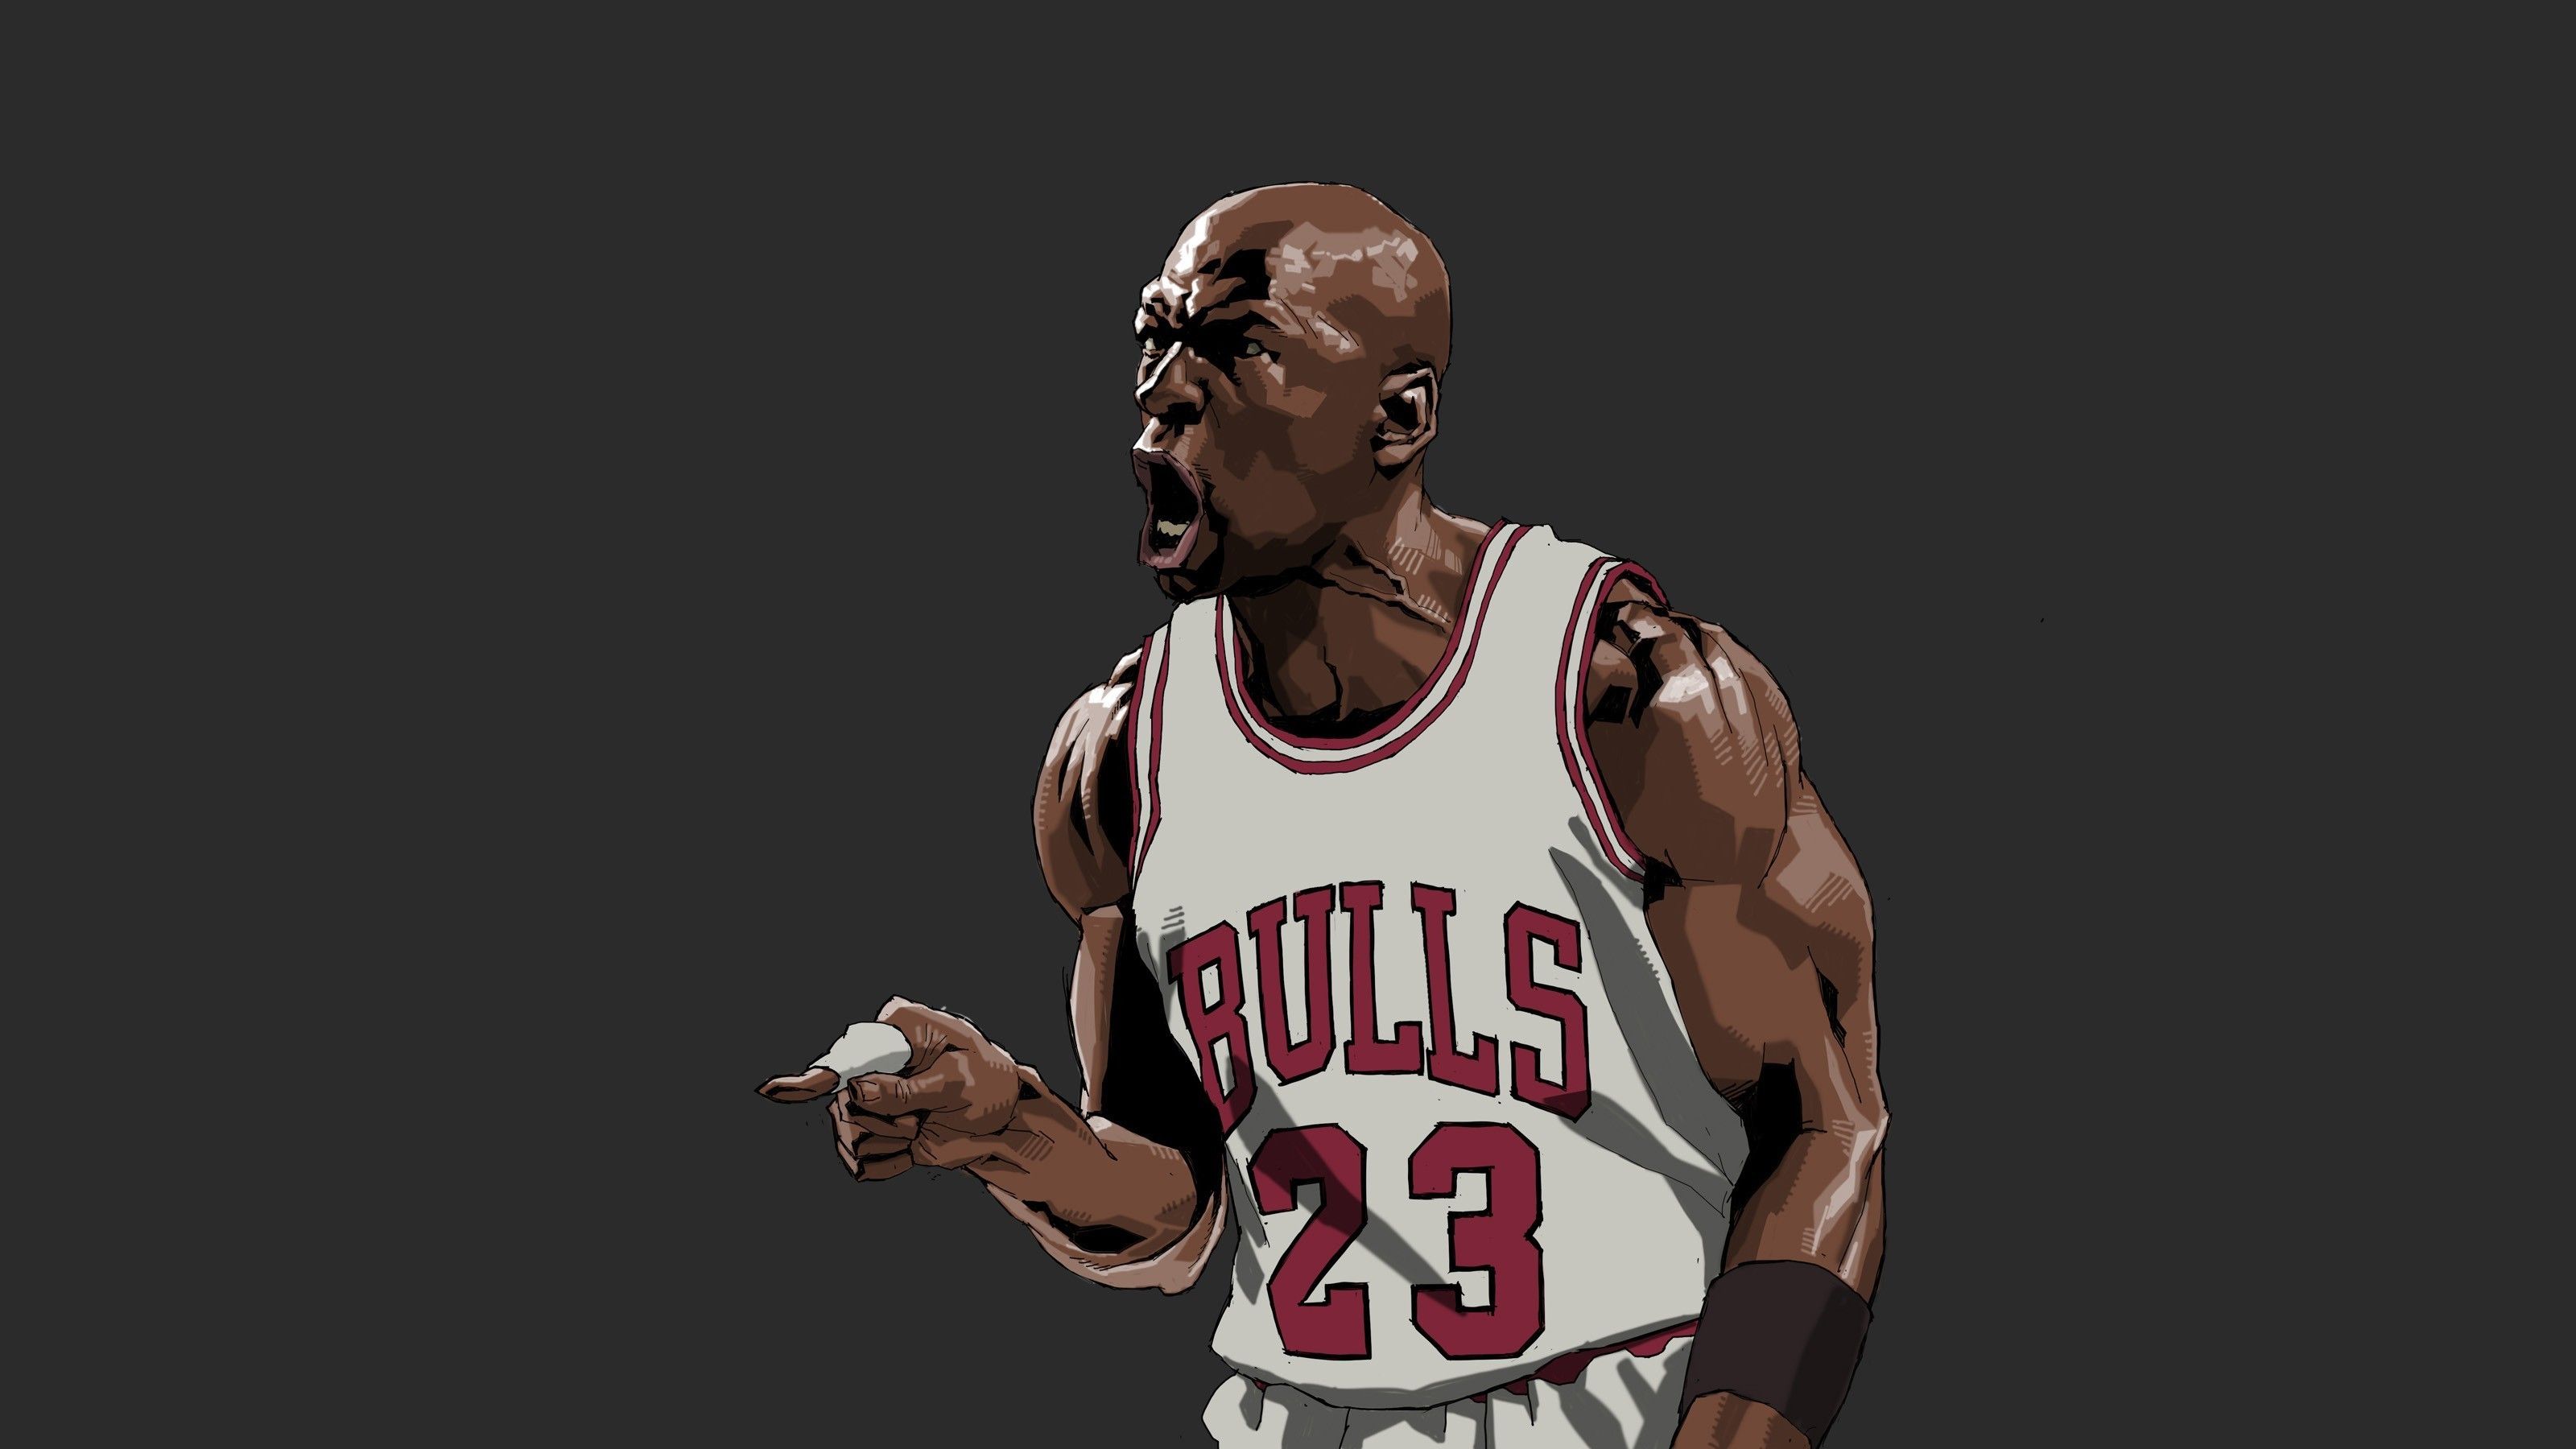 Fondo de pantalla de Michael Jordan 24 - 3200 X 1800 | stmed.net